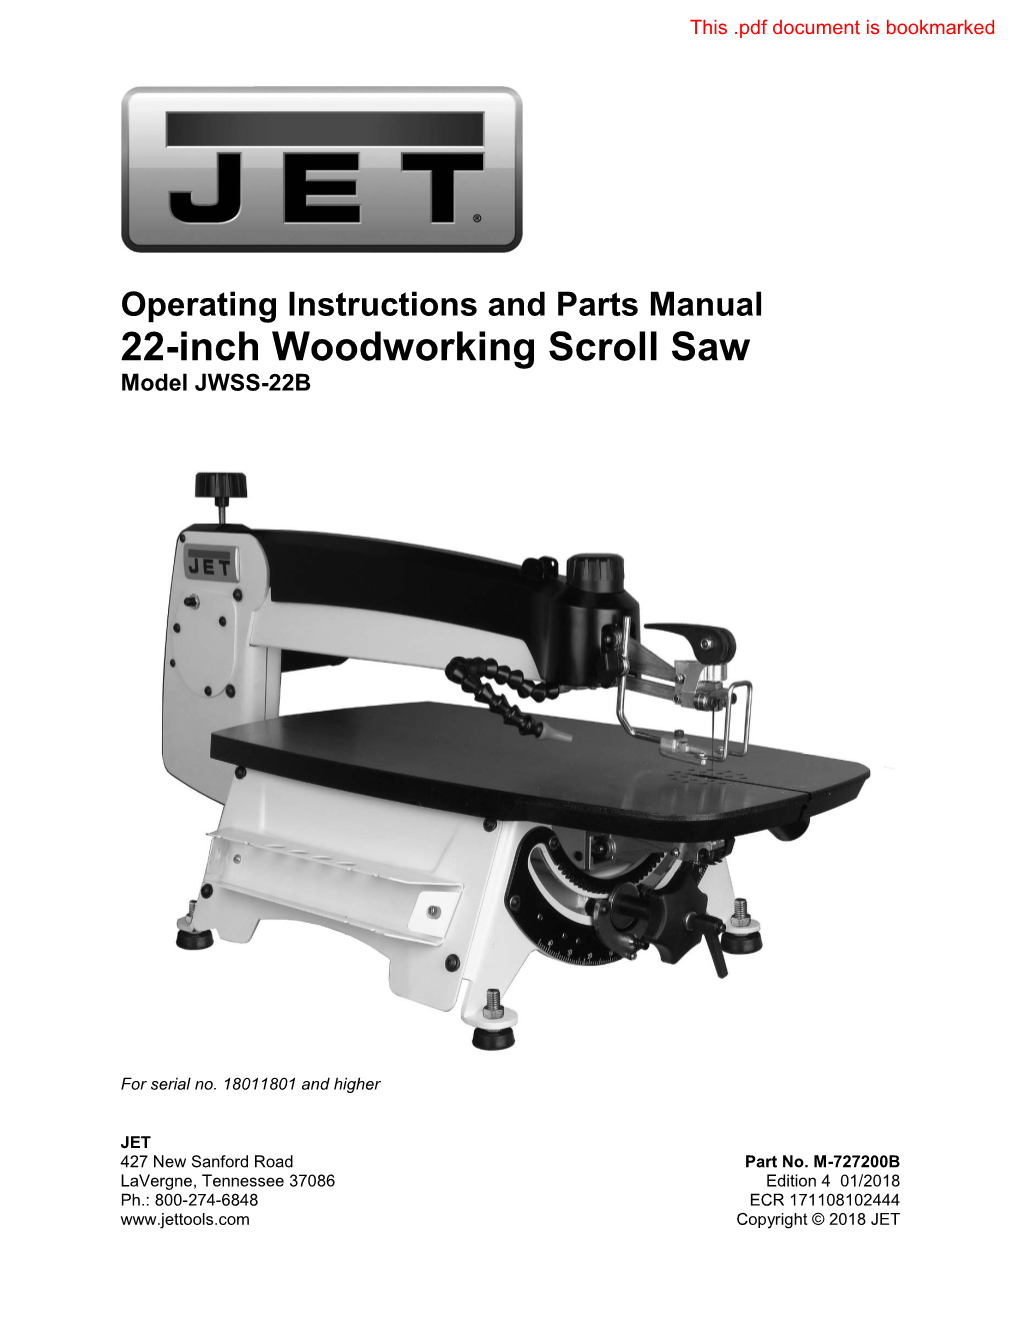 22-Inch Woodworking Scroll Saw Model JWSS-22B